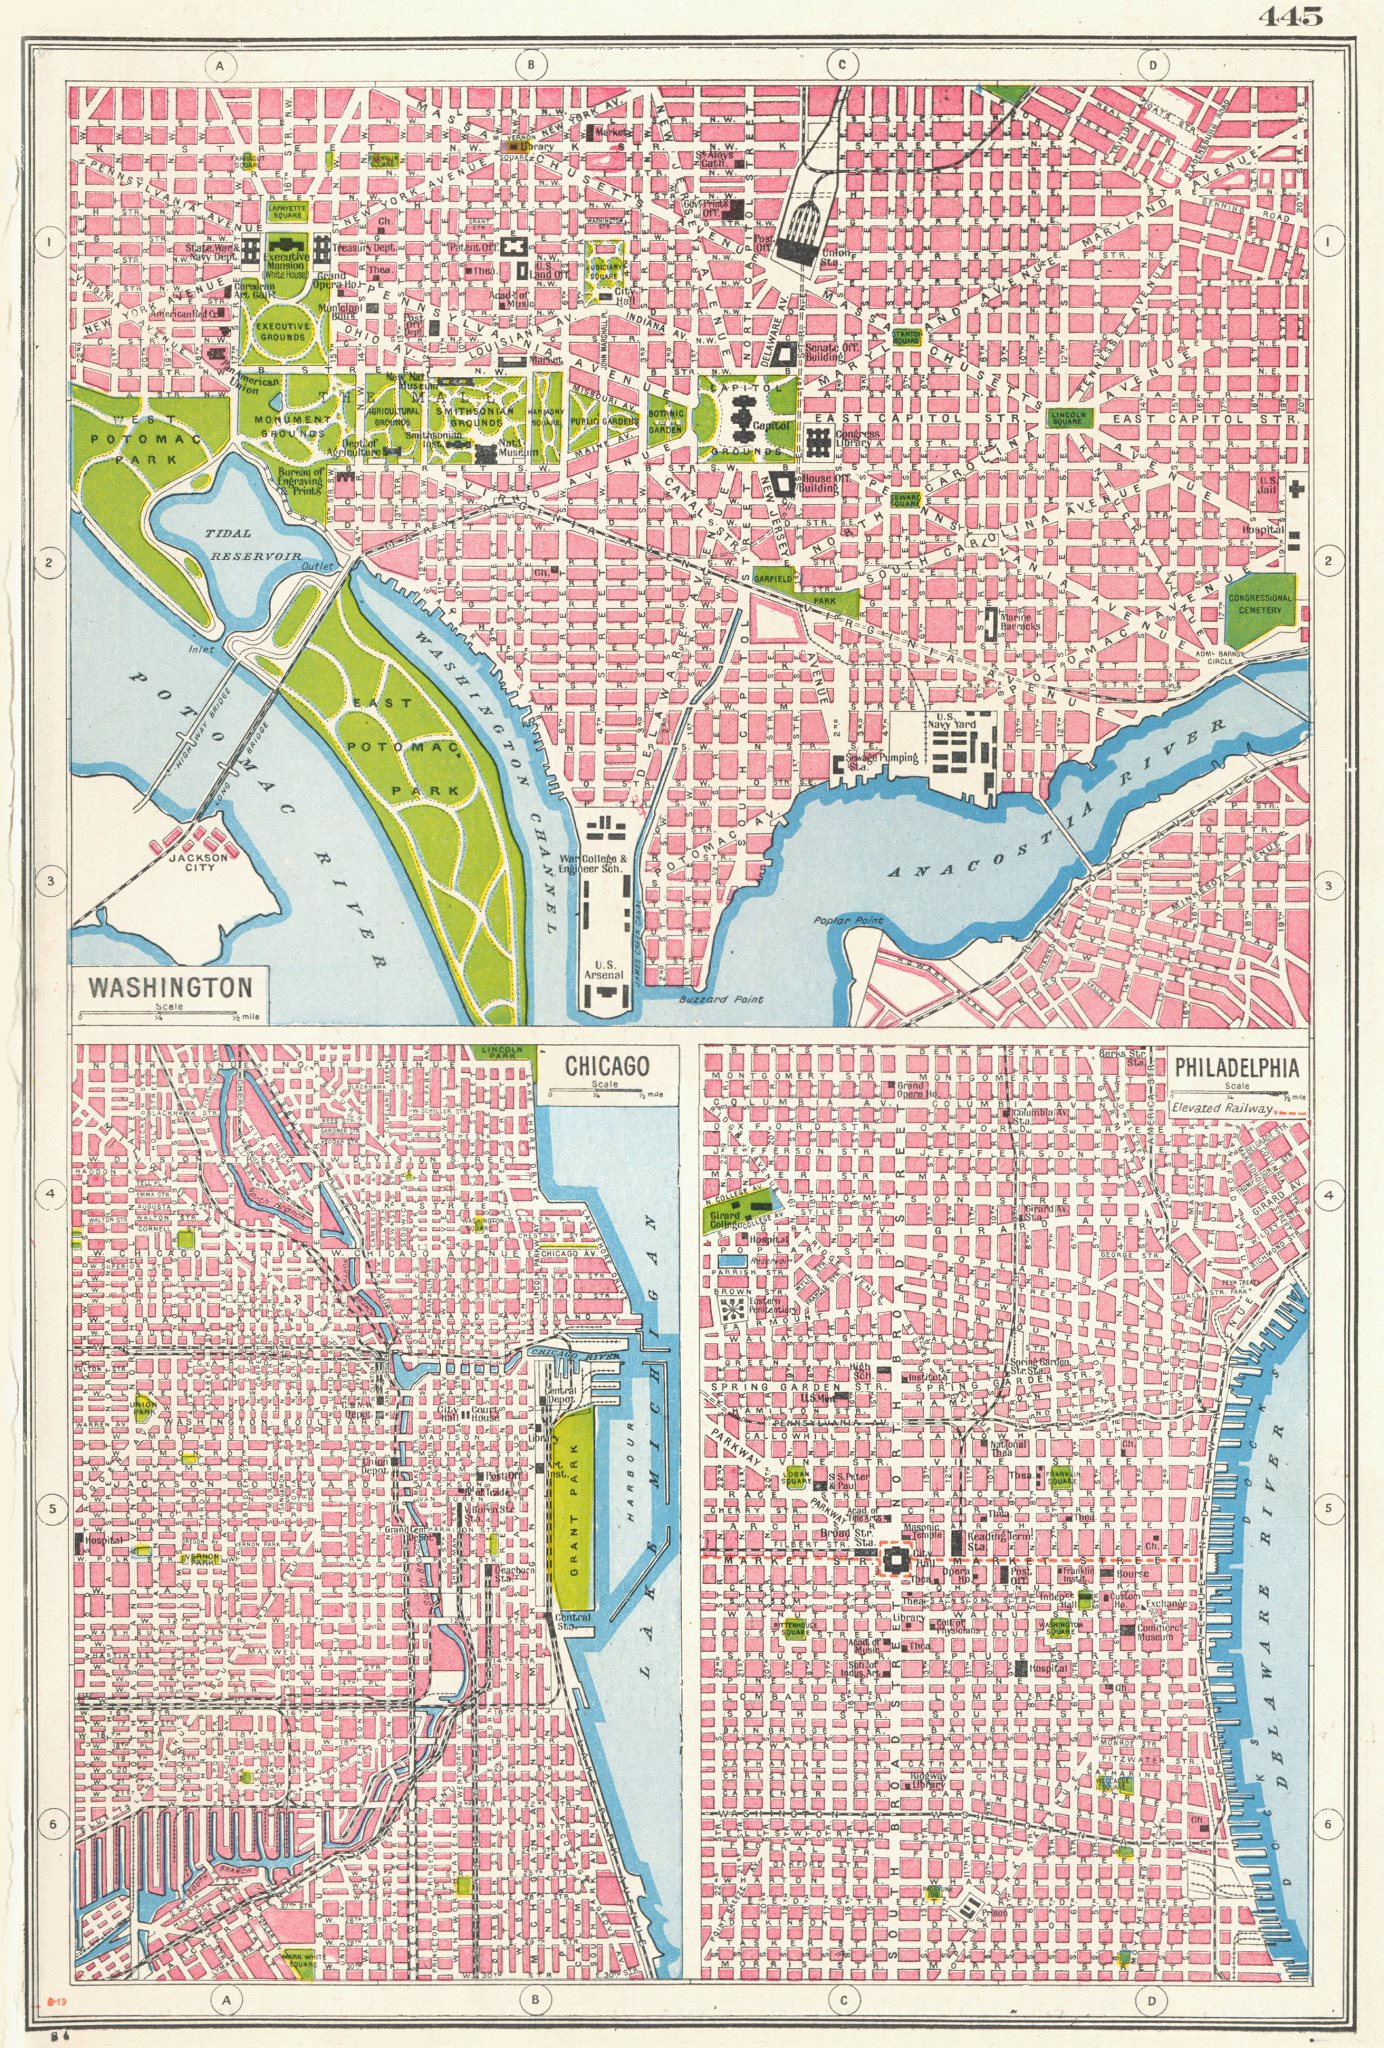 Associate Product USA CITIES. Washington DC Chicago & Philadelphia city plans 1920 old map